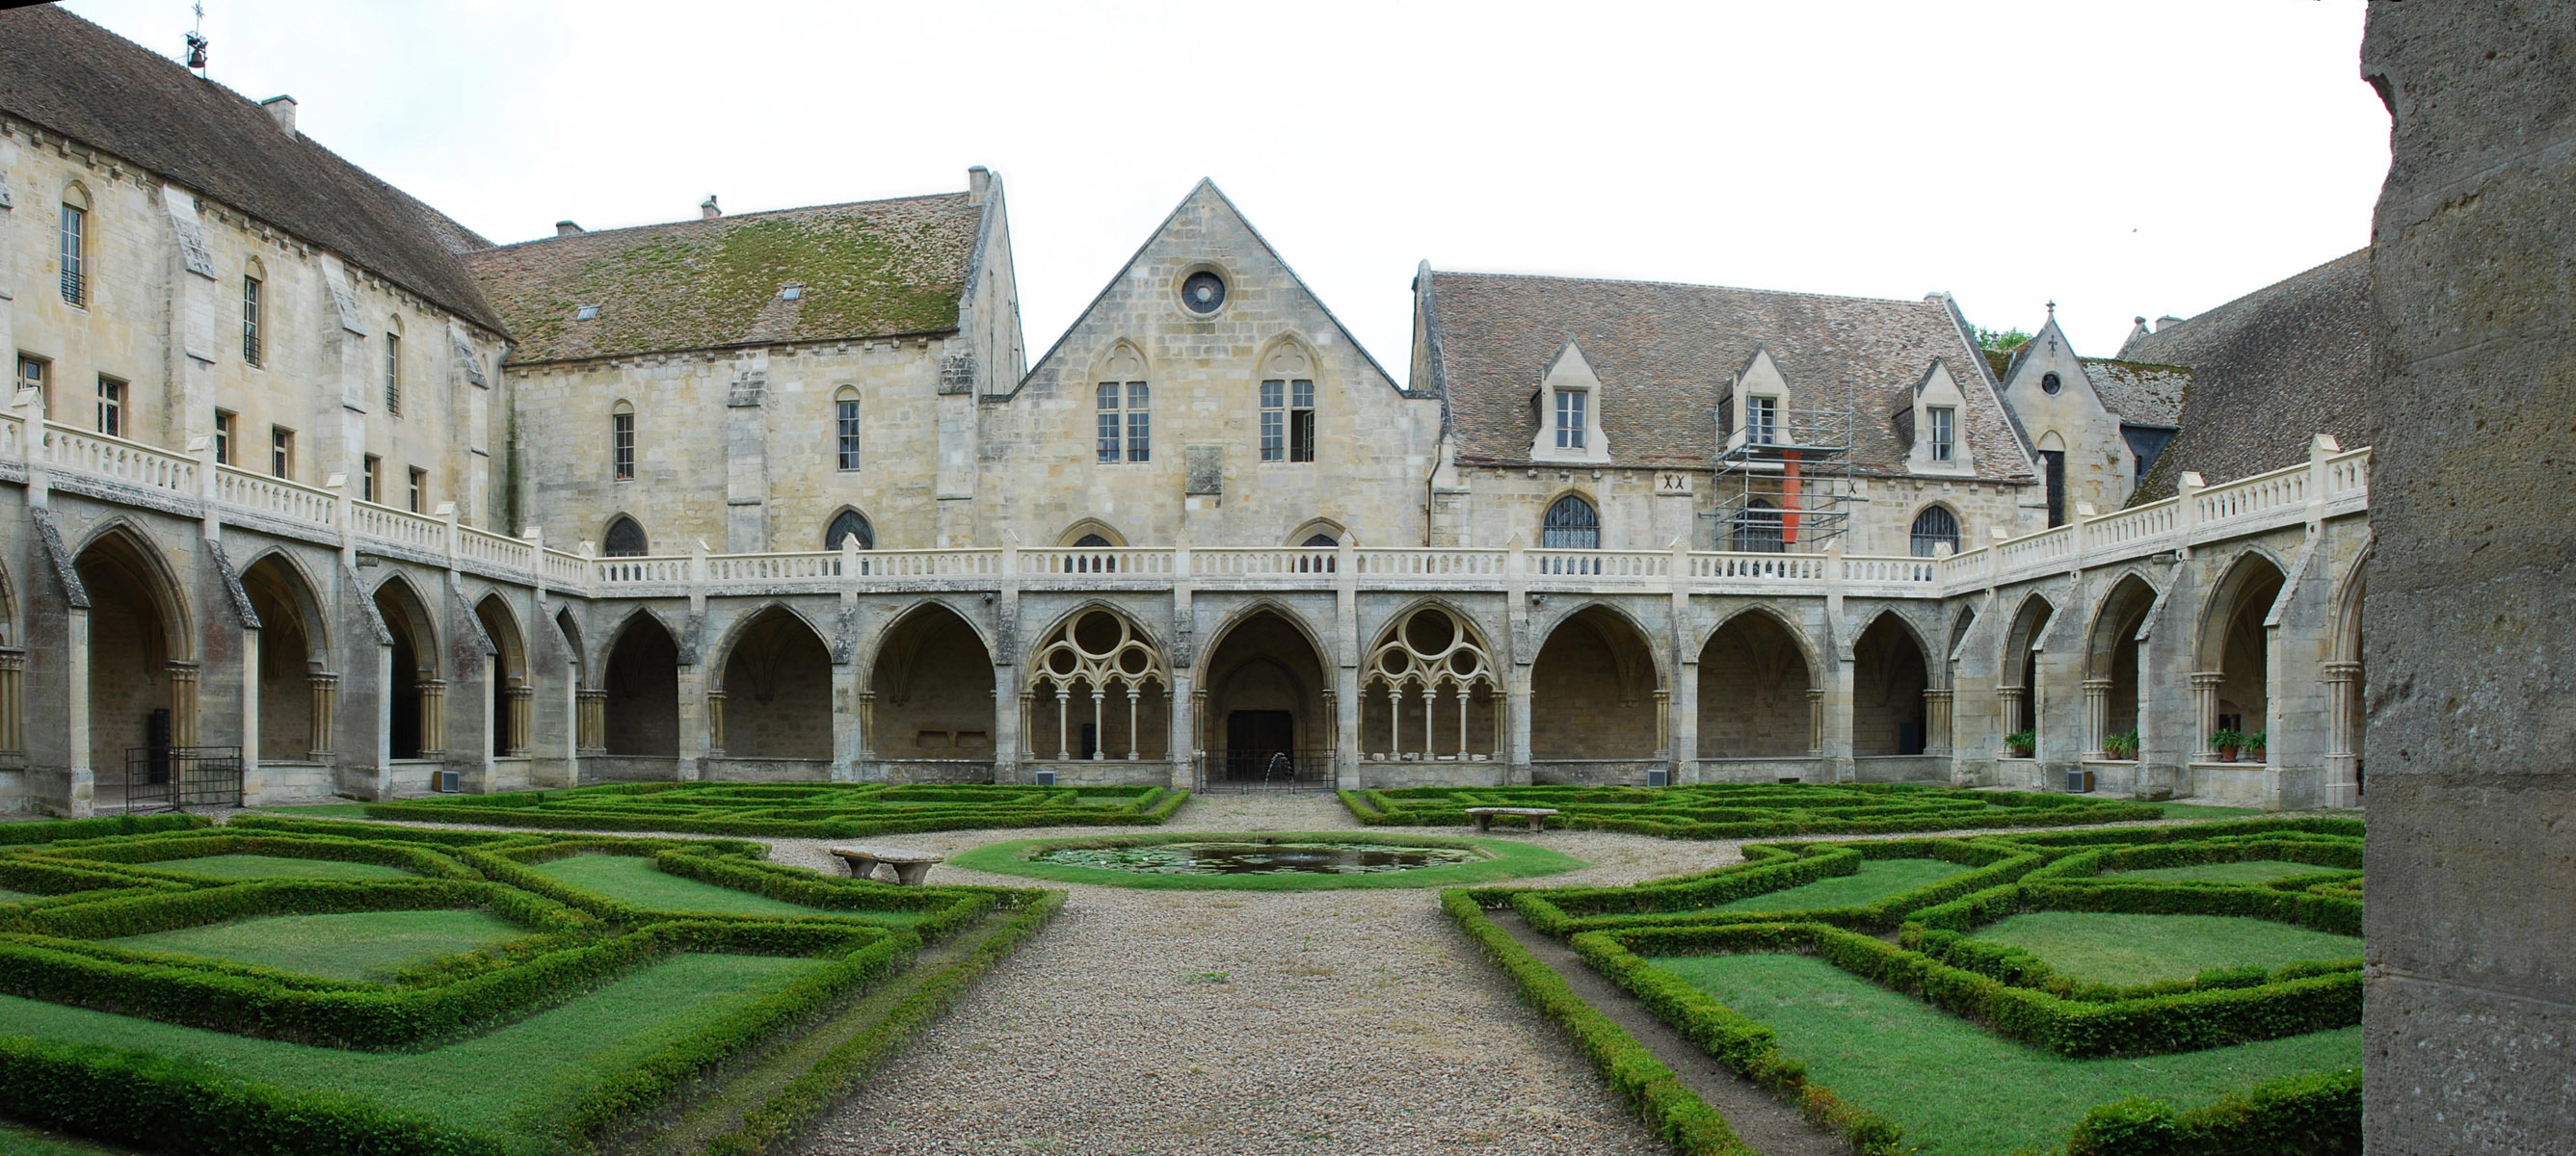 Abbey of Royaumont - France.jpg